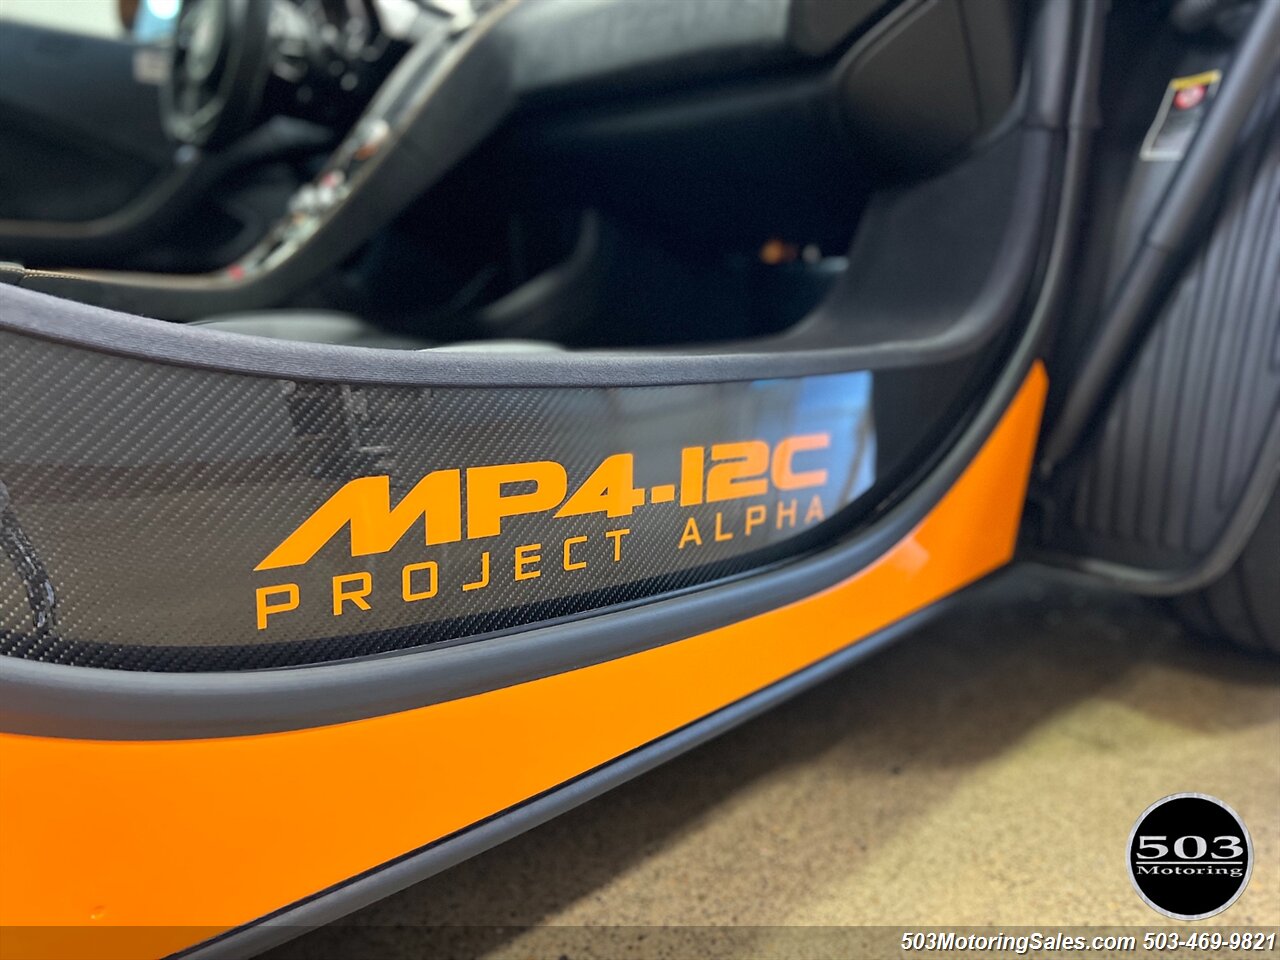 2012 McLaren MP4-12C  Project Alpha #4 - Photo 71 - Beaverton, OR 97005